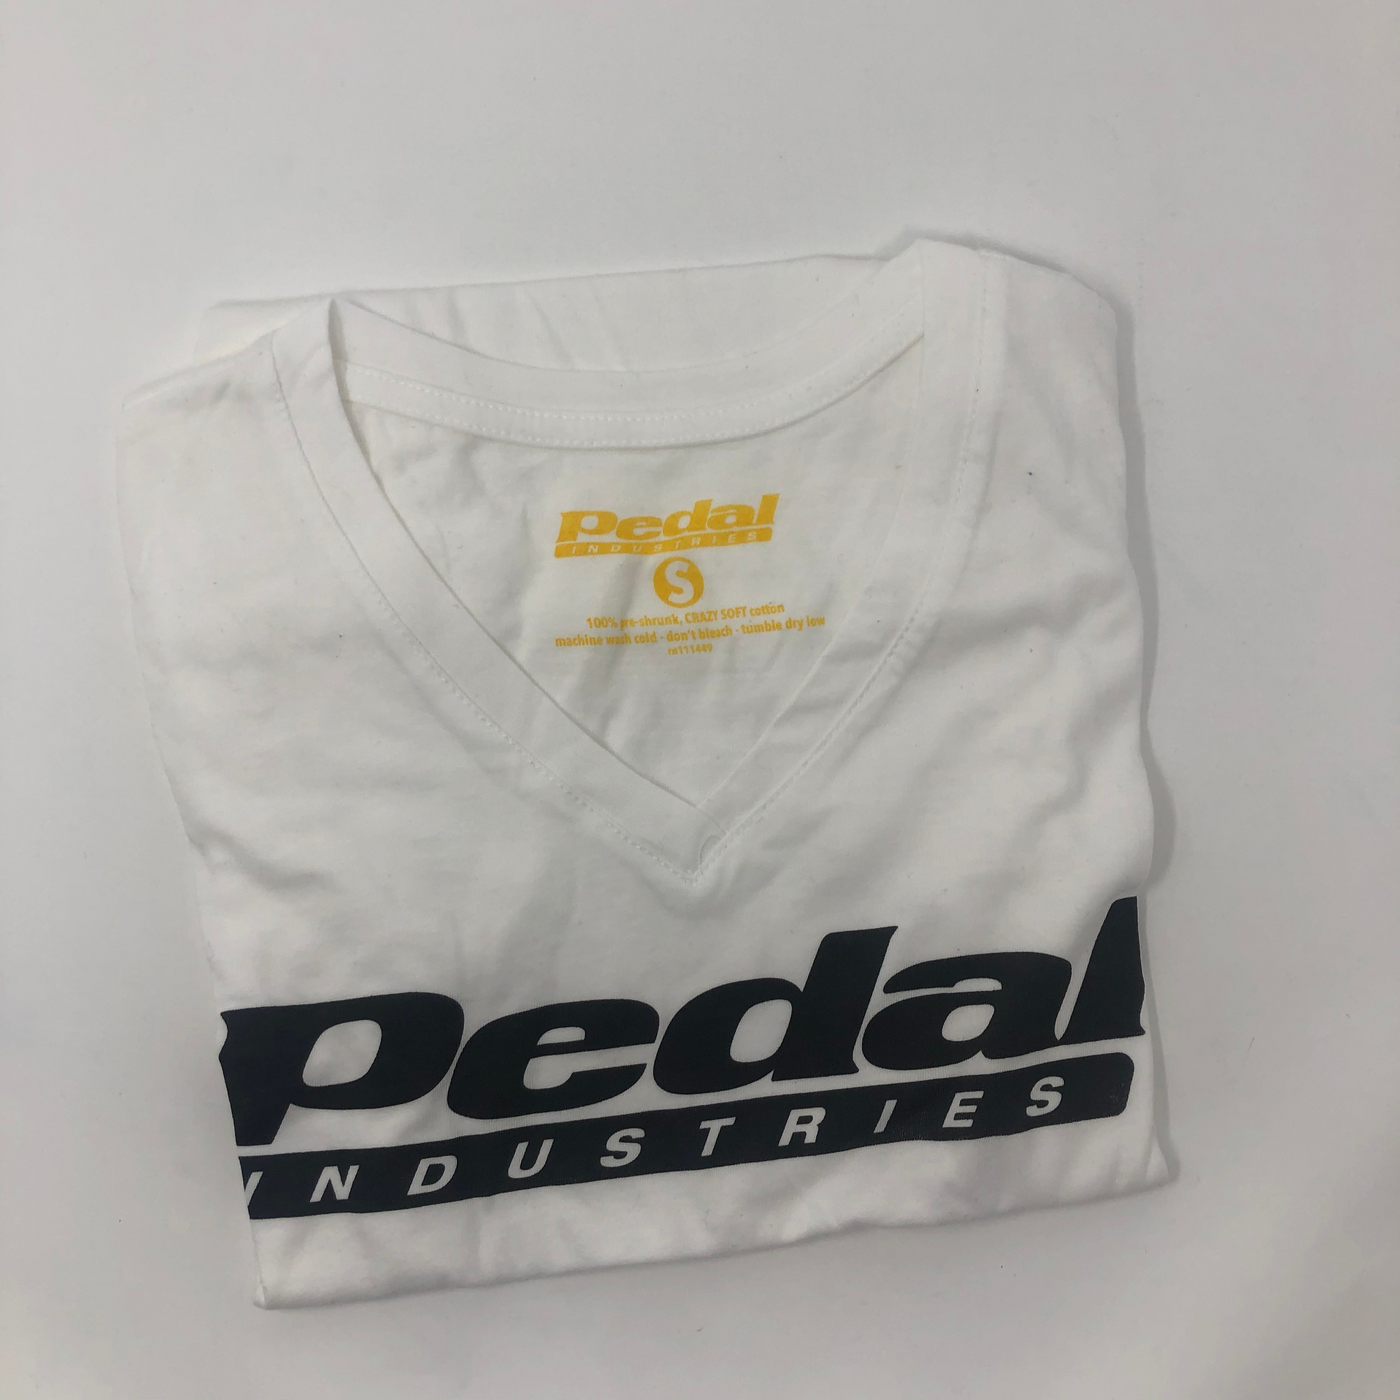 Classic PEDAL logo - ladies - white and black